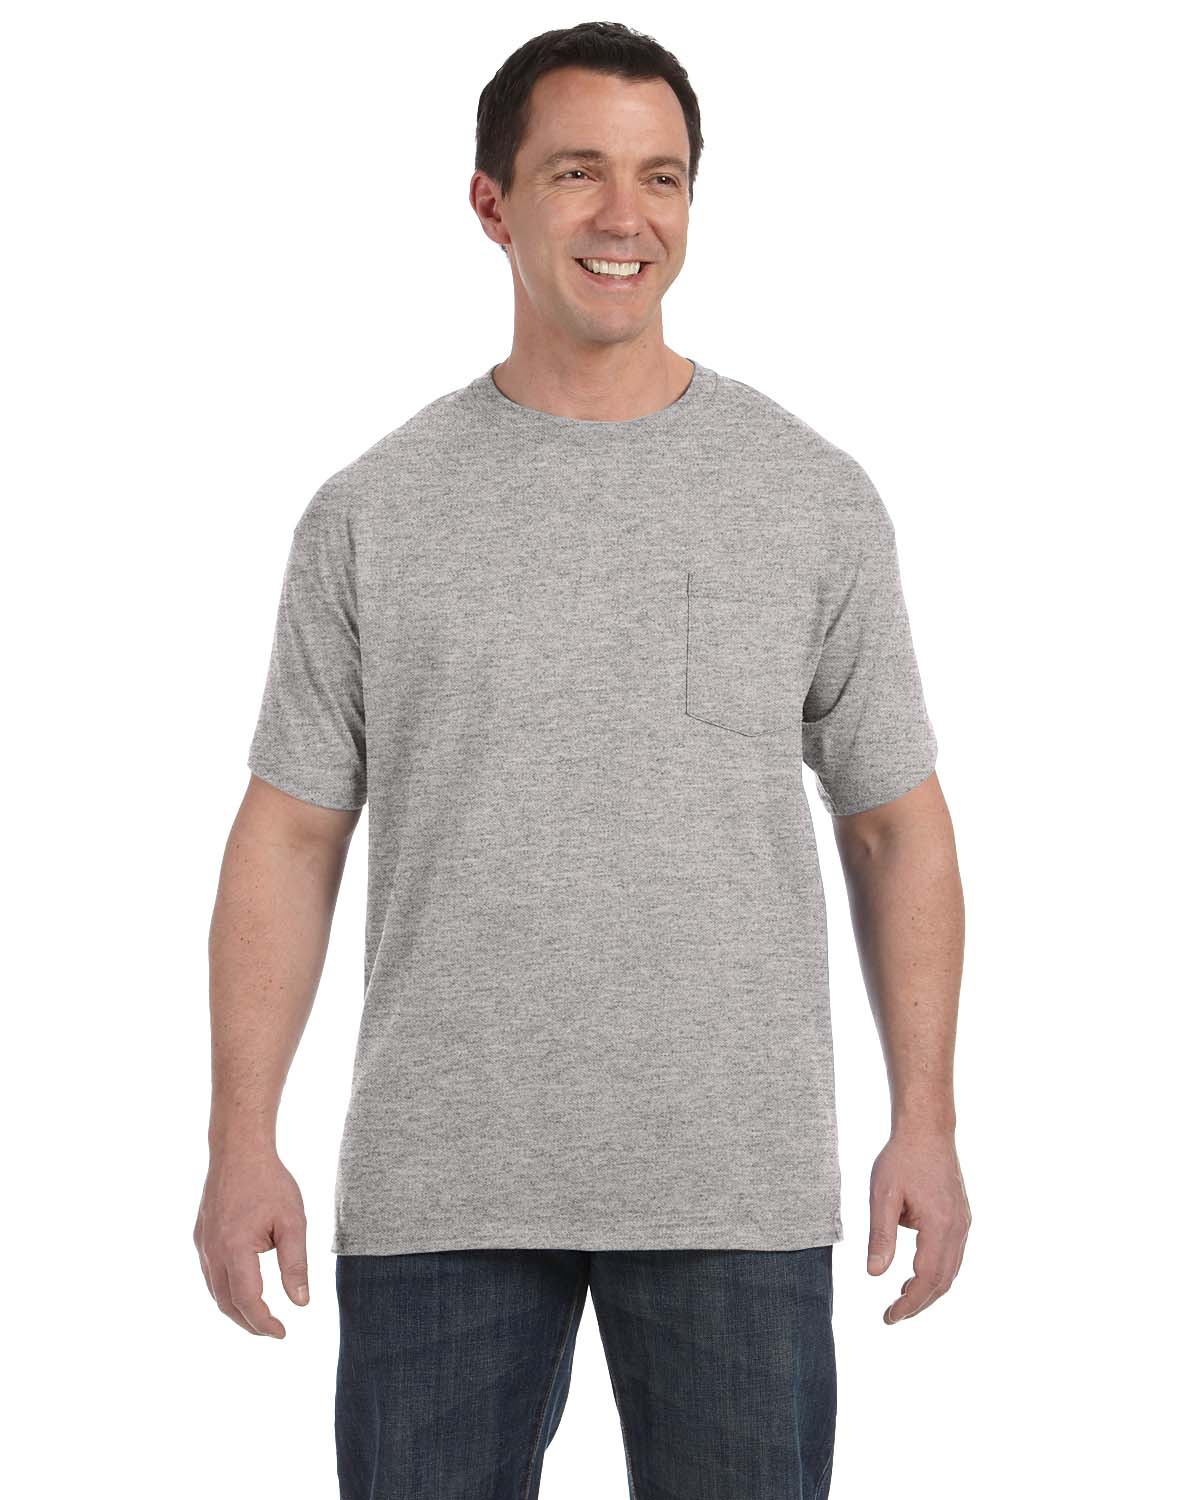 H5590 Hanes Men's 6.1 oz Tagless Pocket T-Shirt